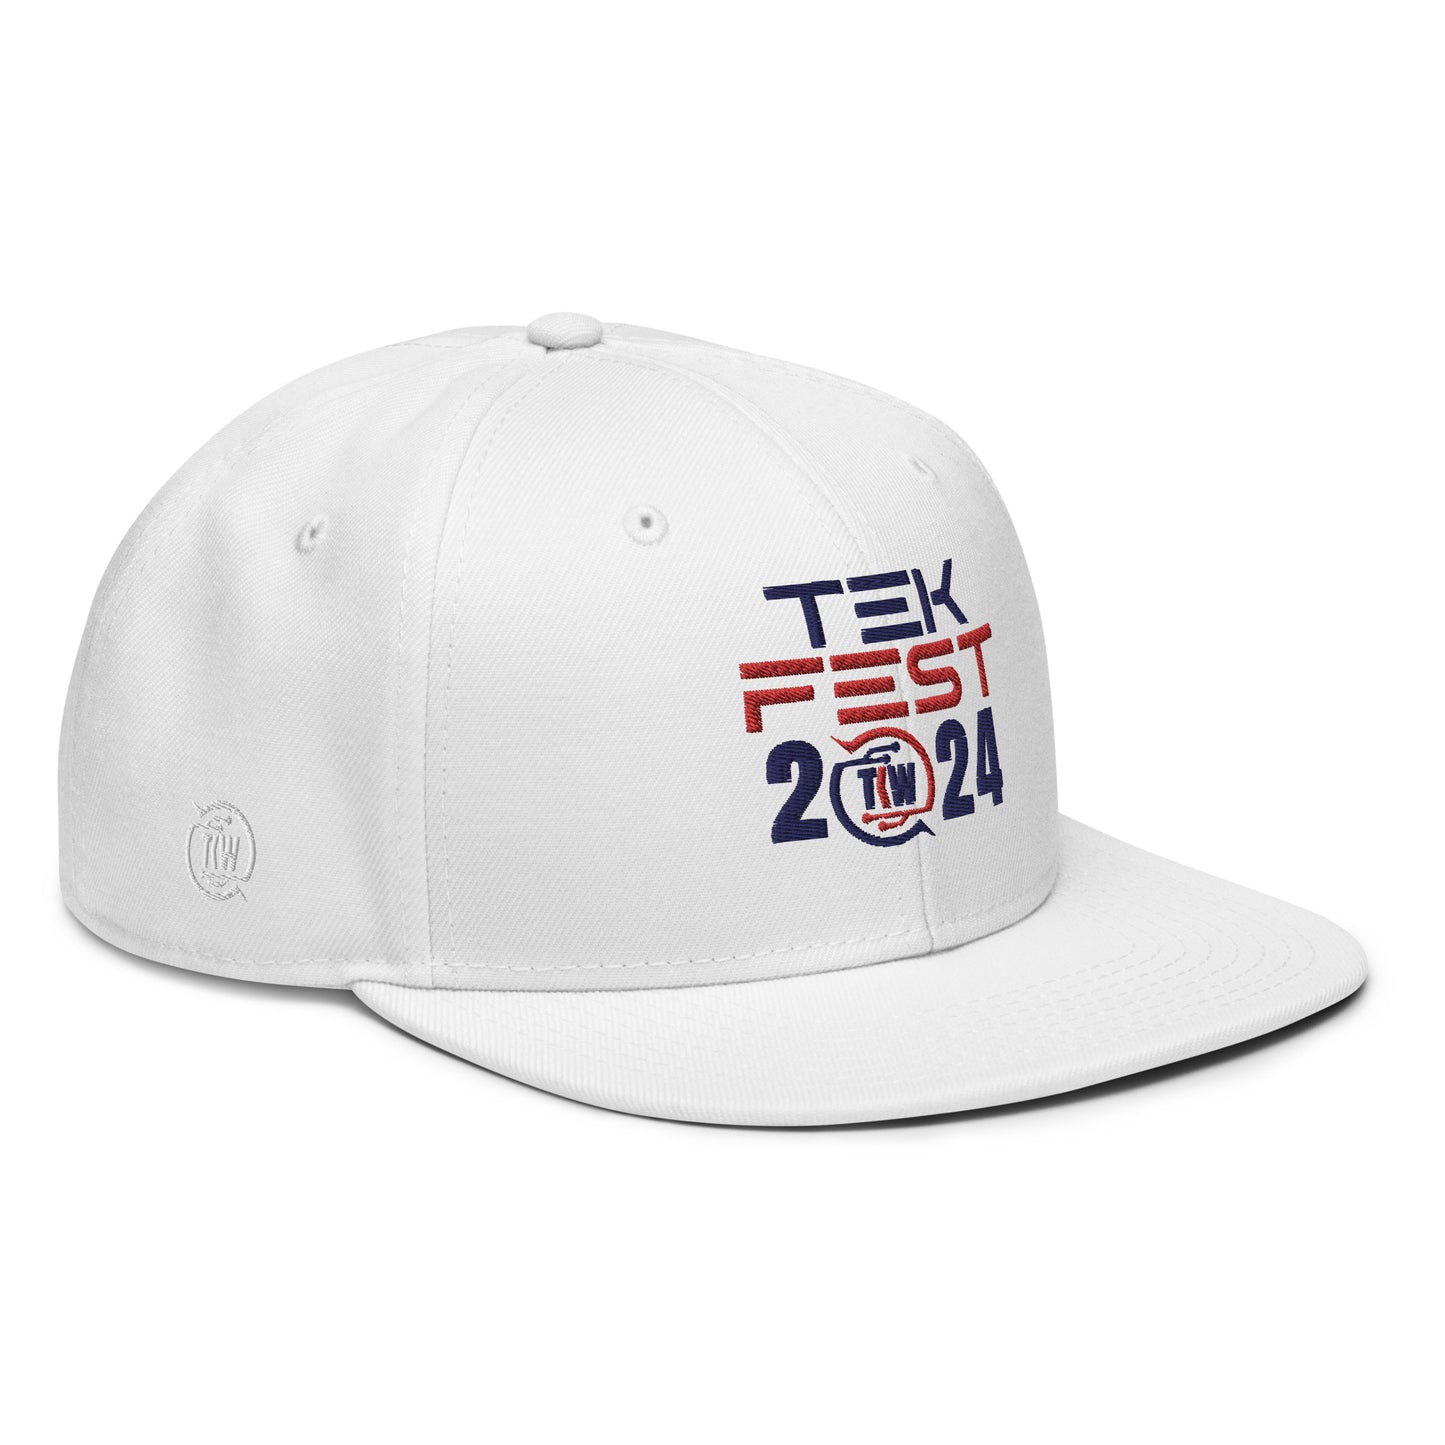 TEKFest24 SnapBack Color Hat